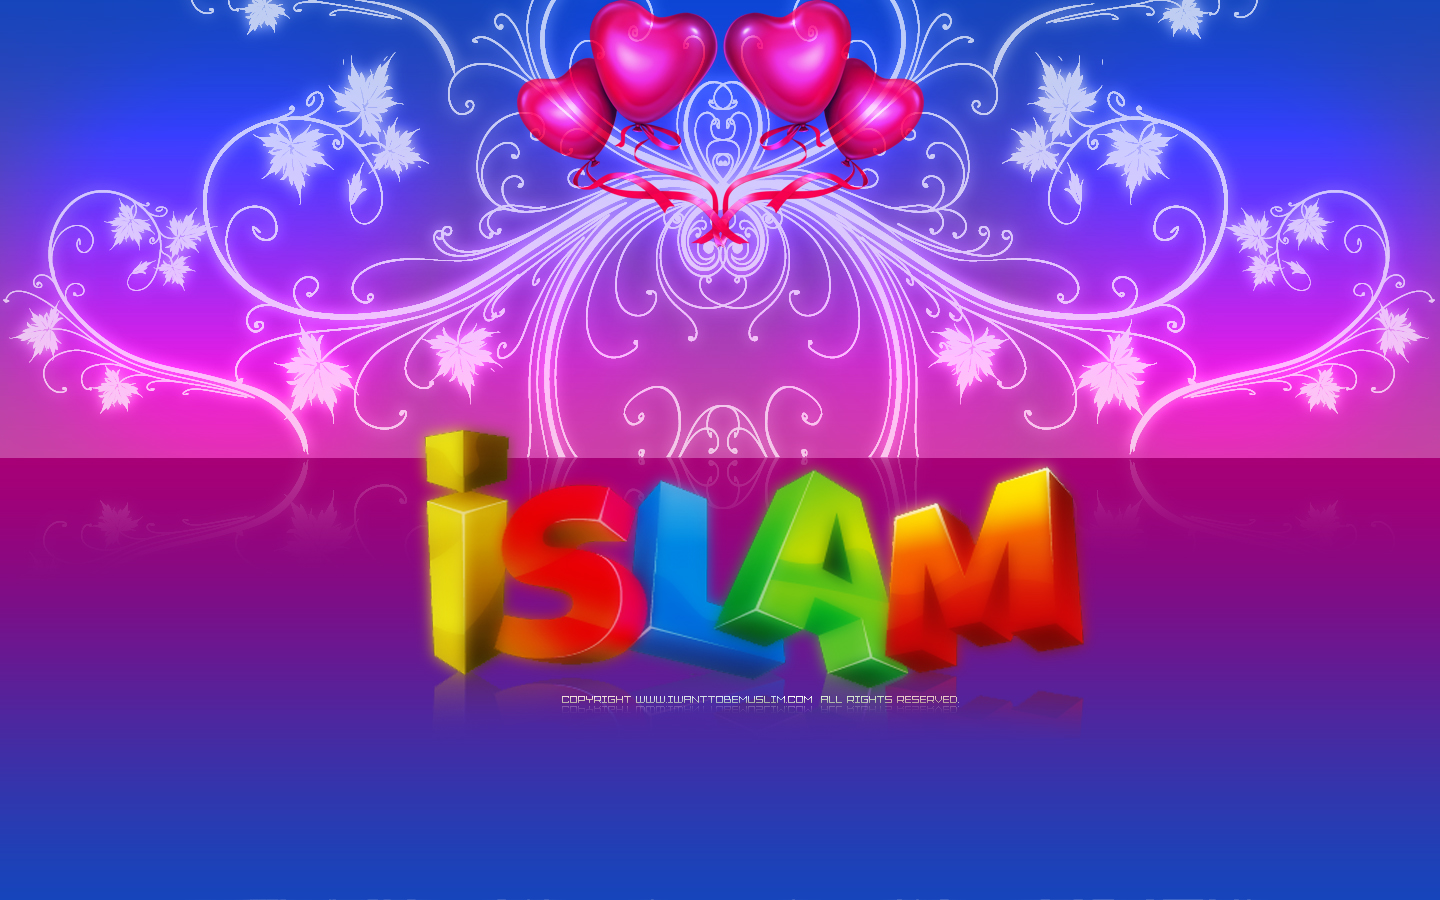 Free Islamic Downloads